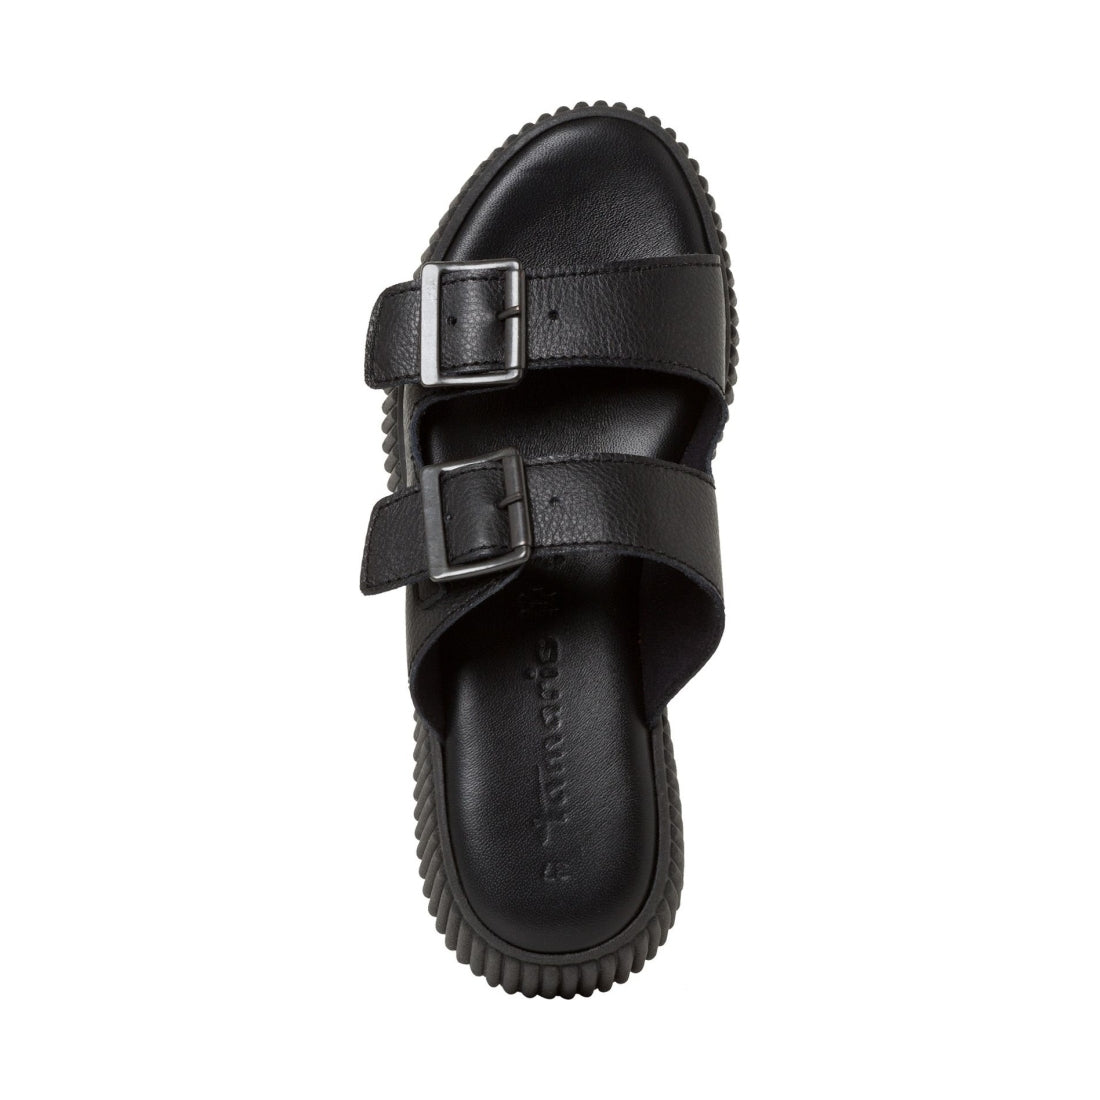 Tamaris womens black casual open slippers | Vilbury London